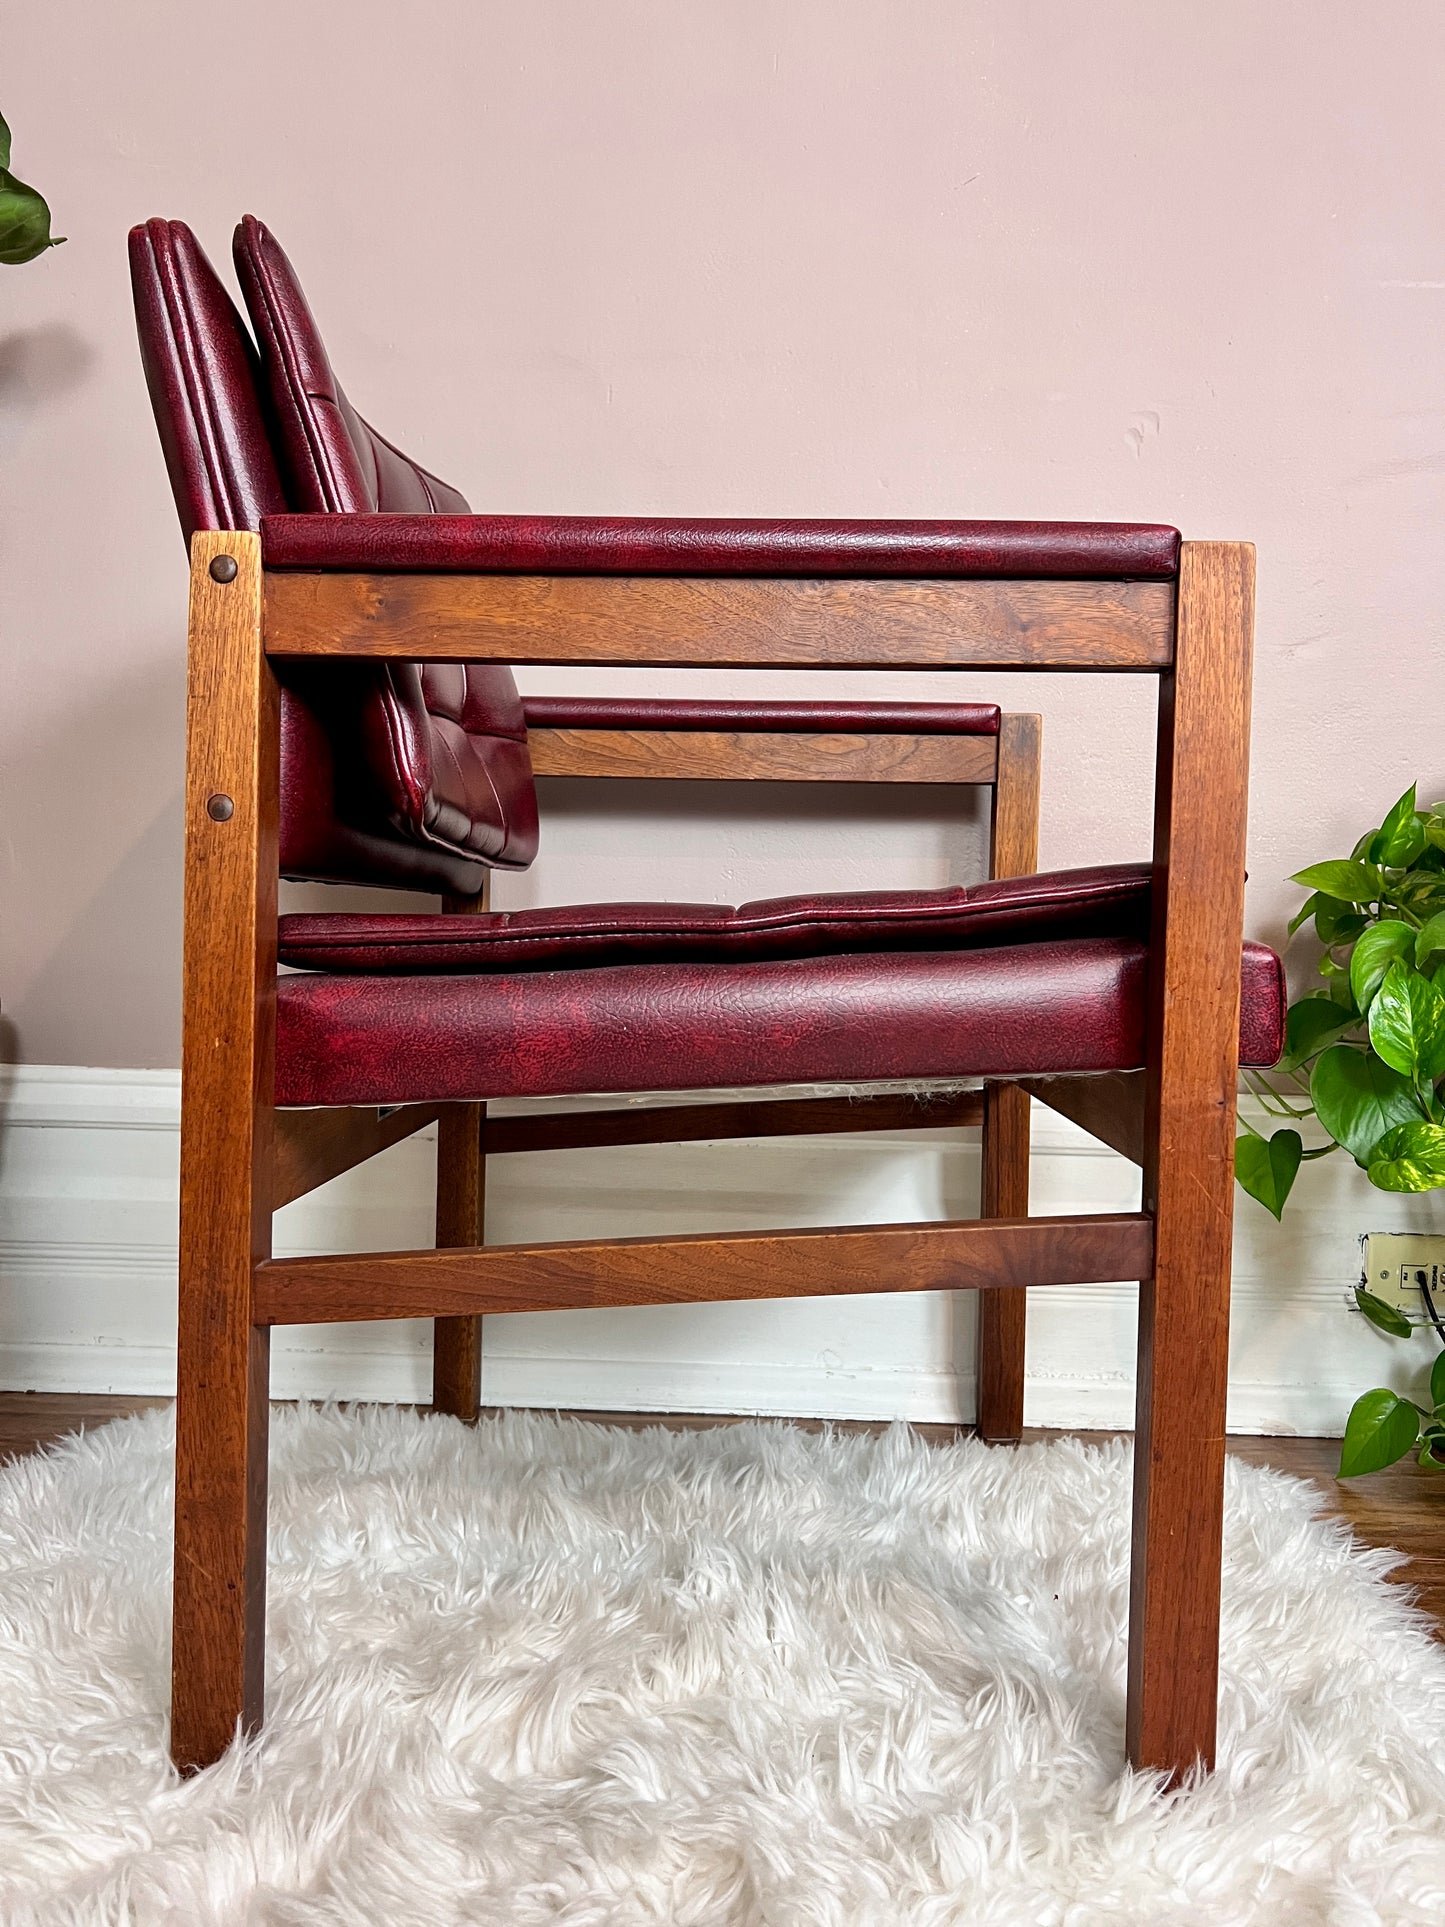 The Sangria Chair